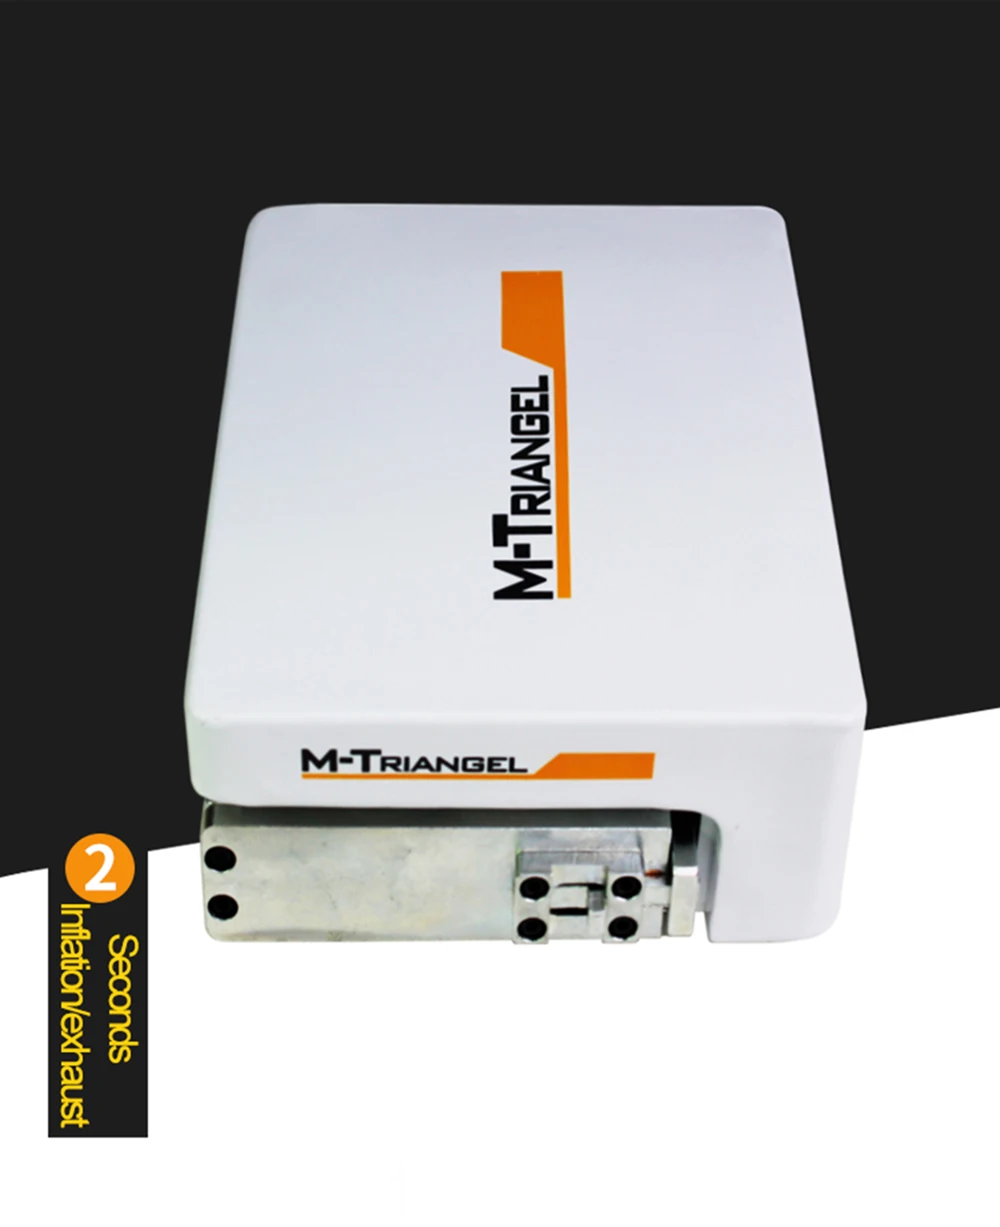 M-Triangel lcd машина для ремонта экрана для iphone ремонт электроинструментов Набор Мини Автоклав ОСА машина для удаления пузырей